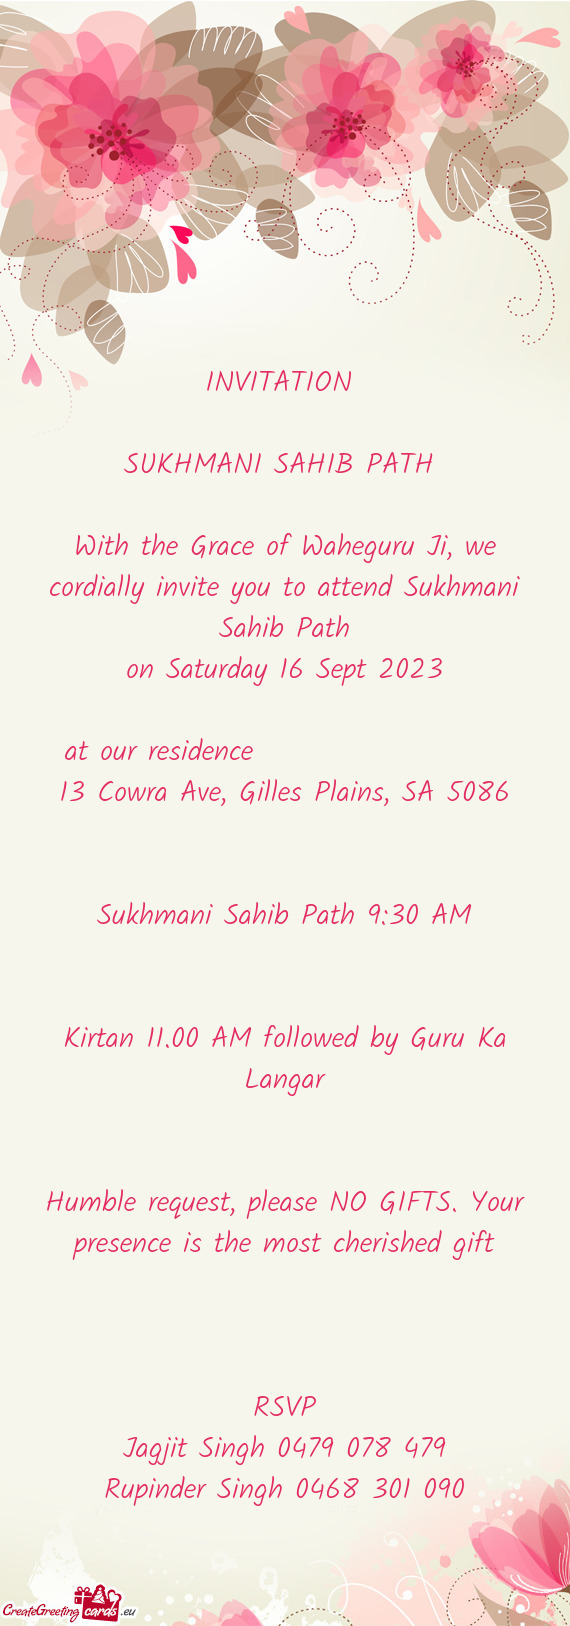 With the Grace of Waheguru Ji, we cordially invite you to attend Sukhmani Sahib Path